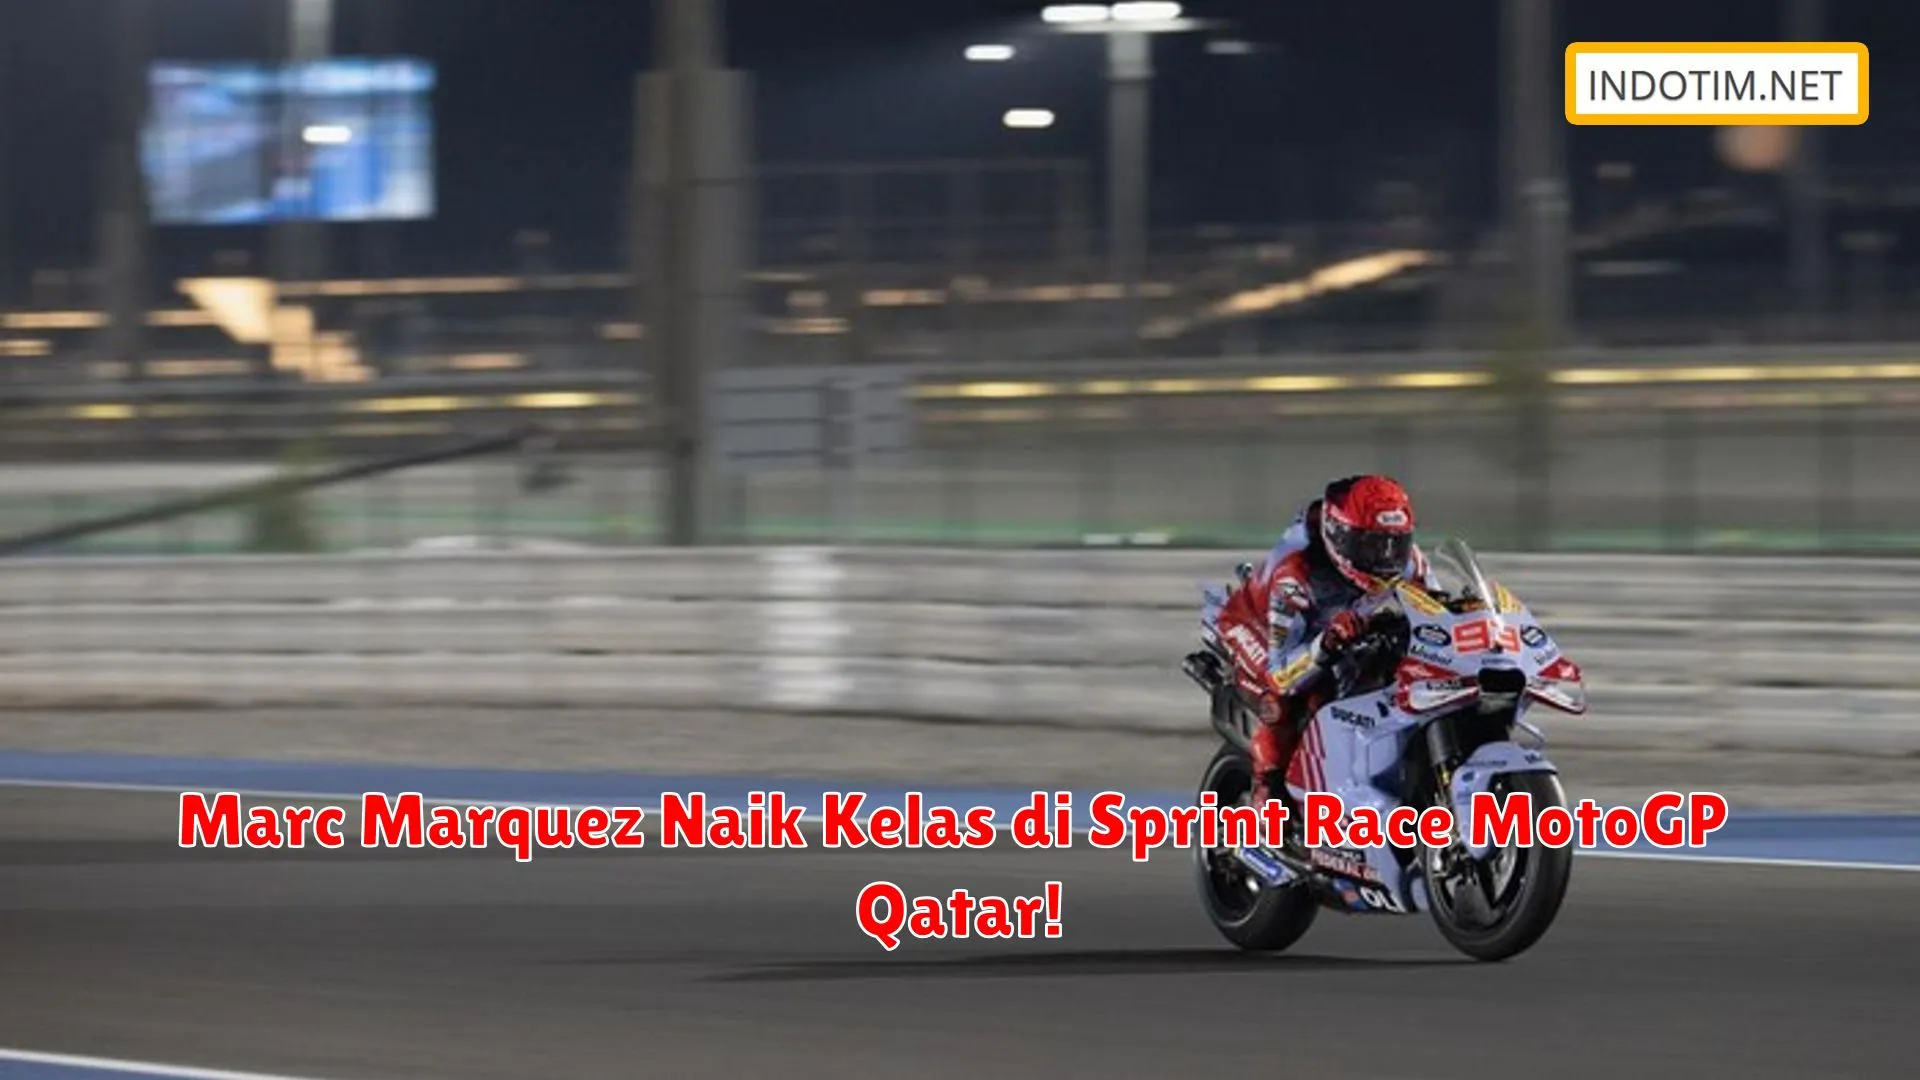 Marc Marquez Naik Kelas di Sprint Race MotoGP Qatar!